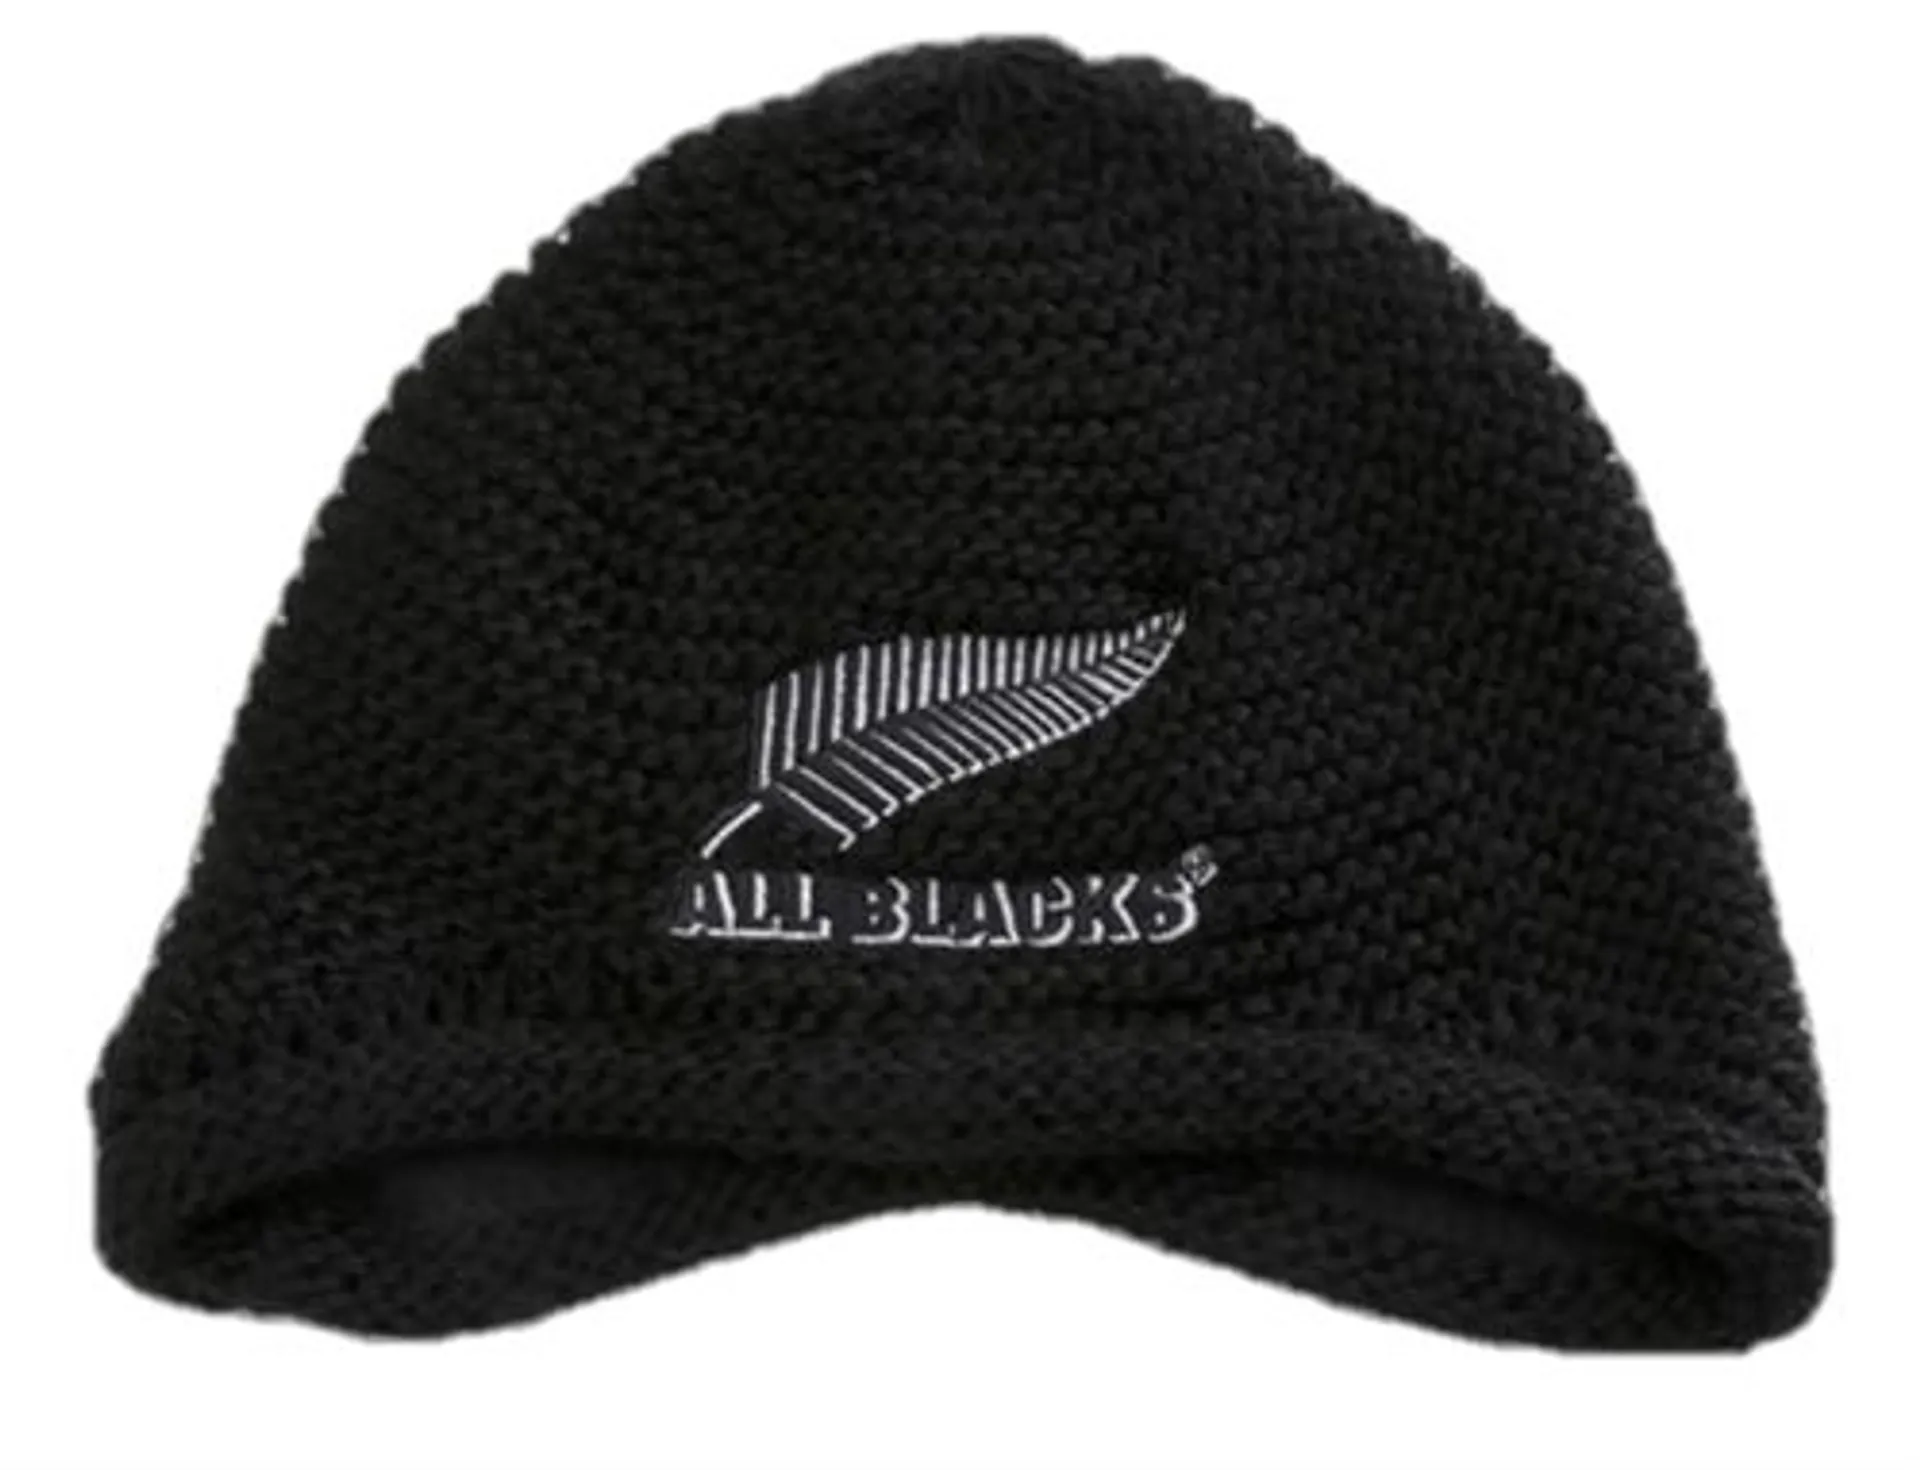 Adidas All Blacks Infant Beanie